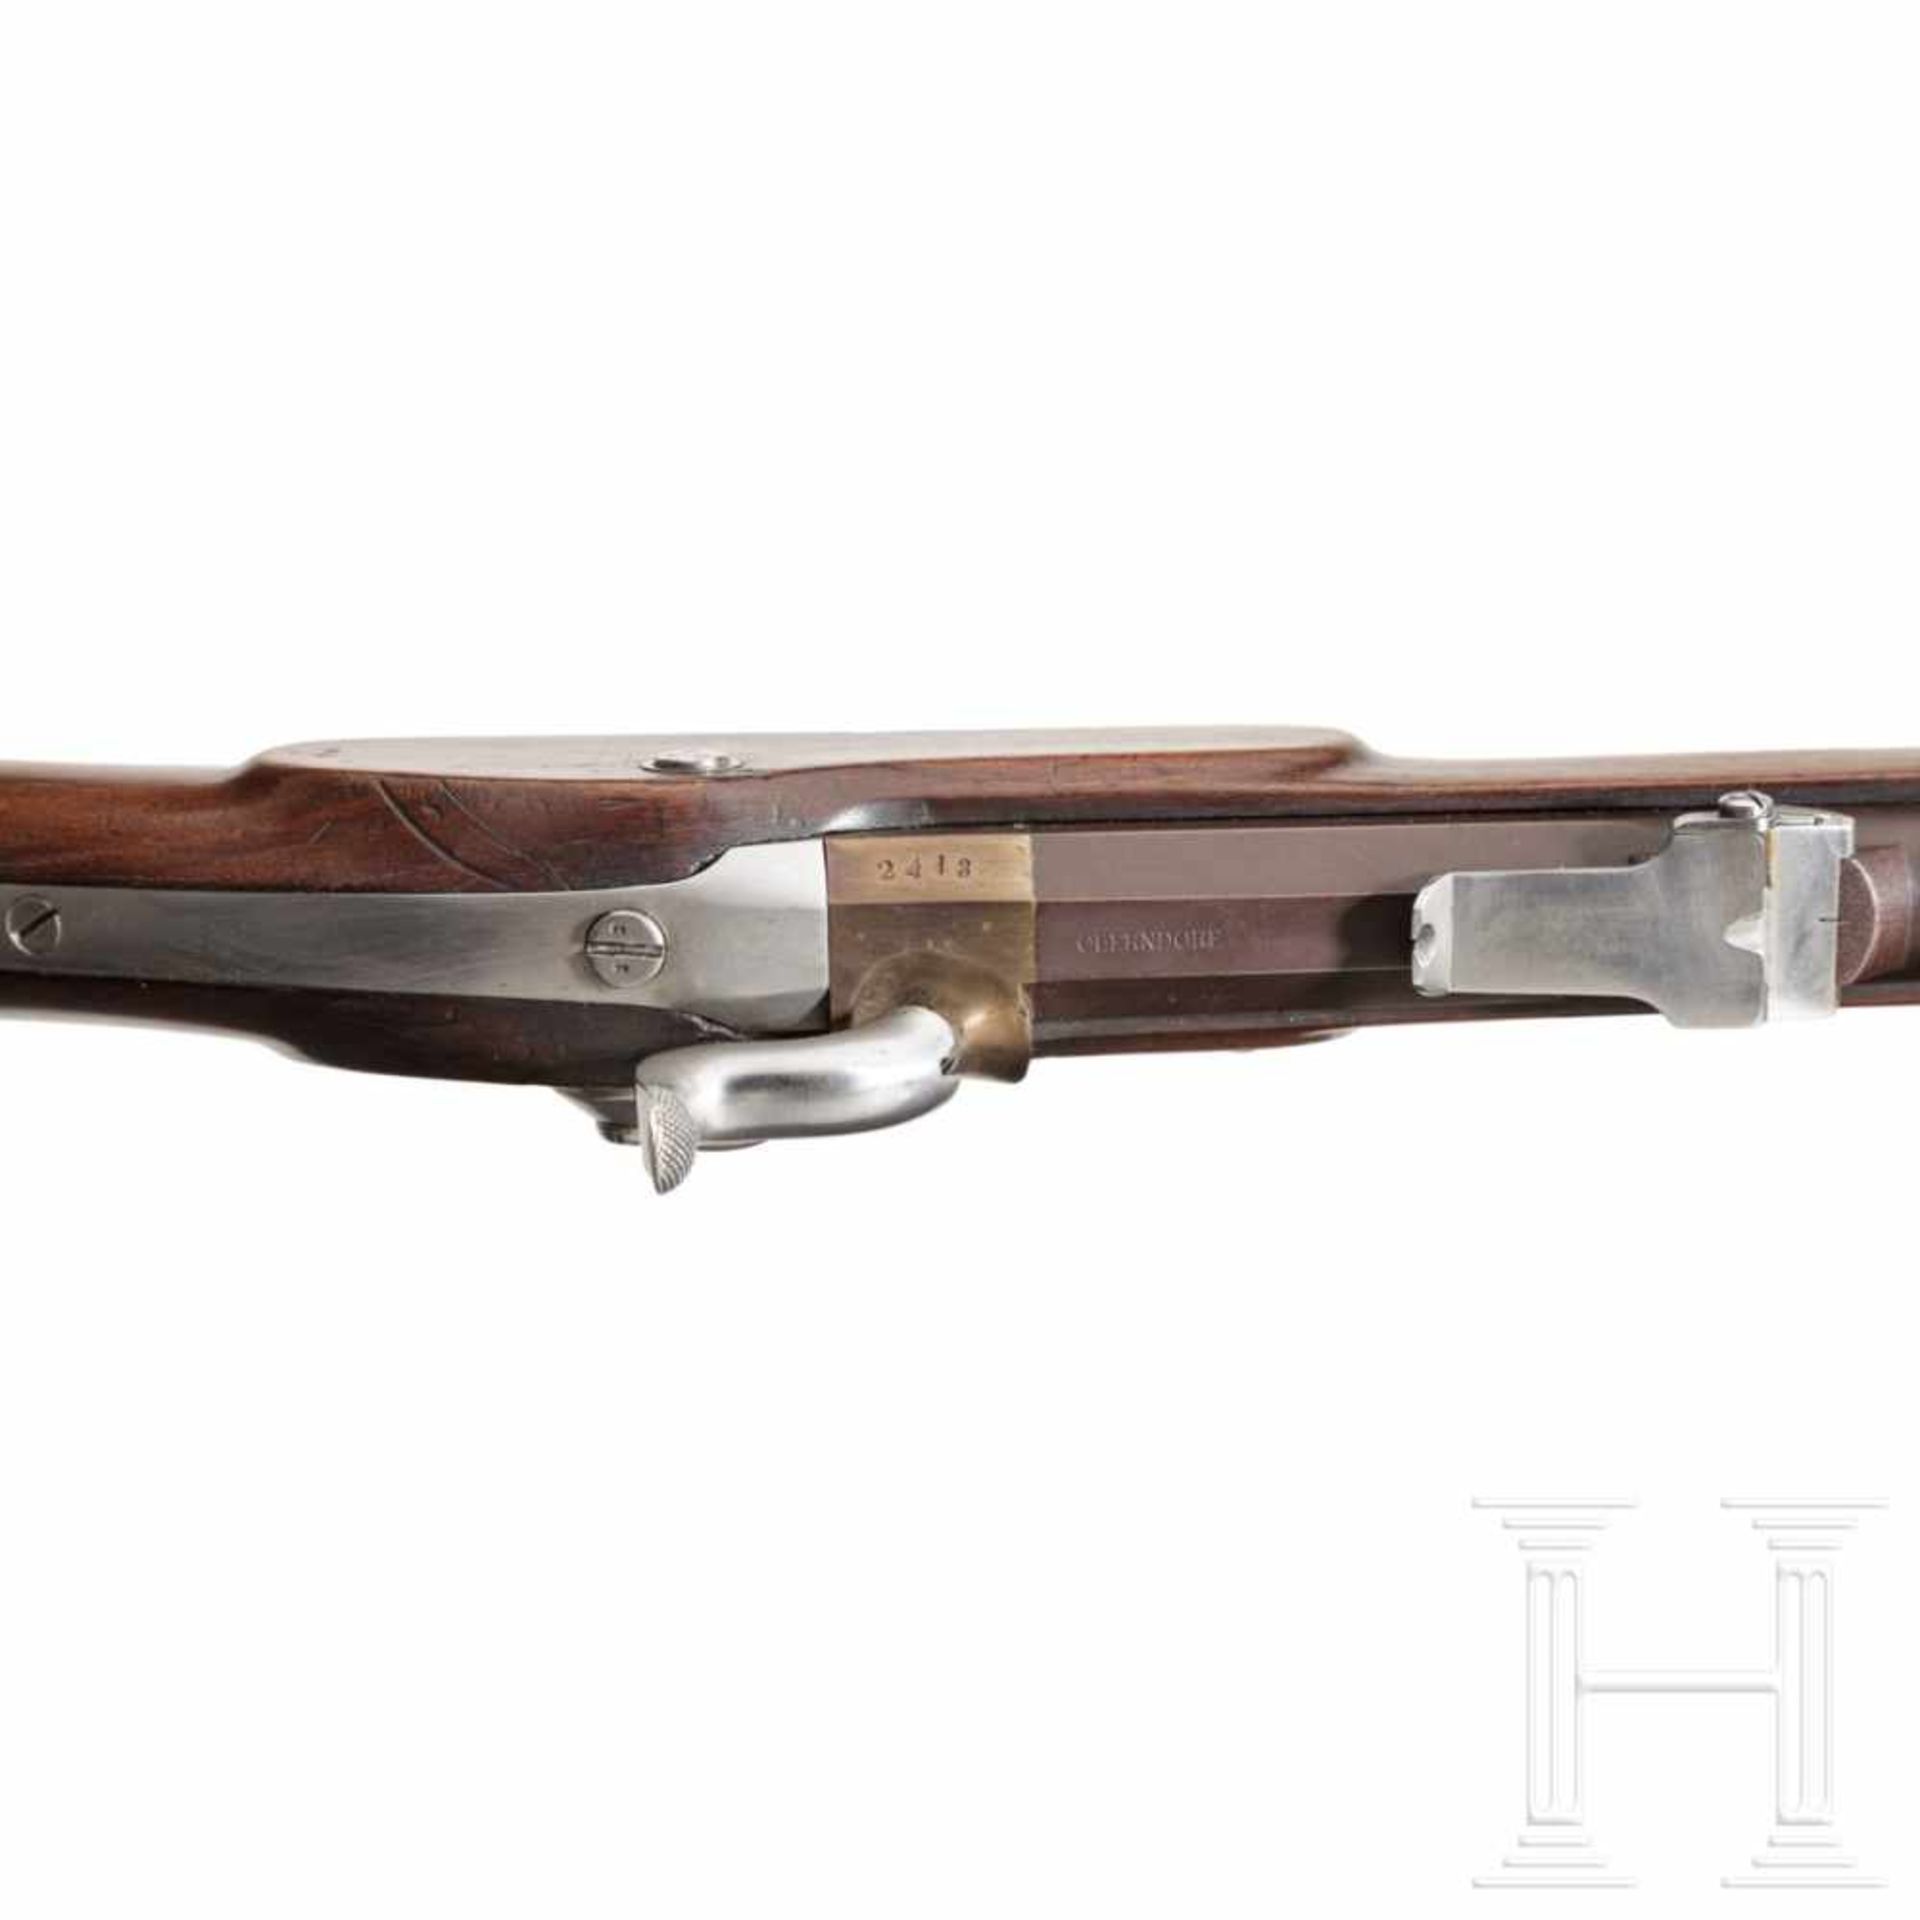 A model 1860 "Jäger" rifleFive-groove rifled bore in 13.9 mm calibre, quadrant rear sight, scaled - Bild 3 aus 3